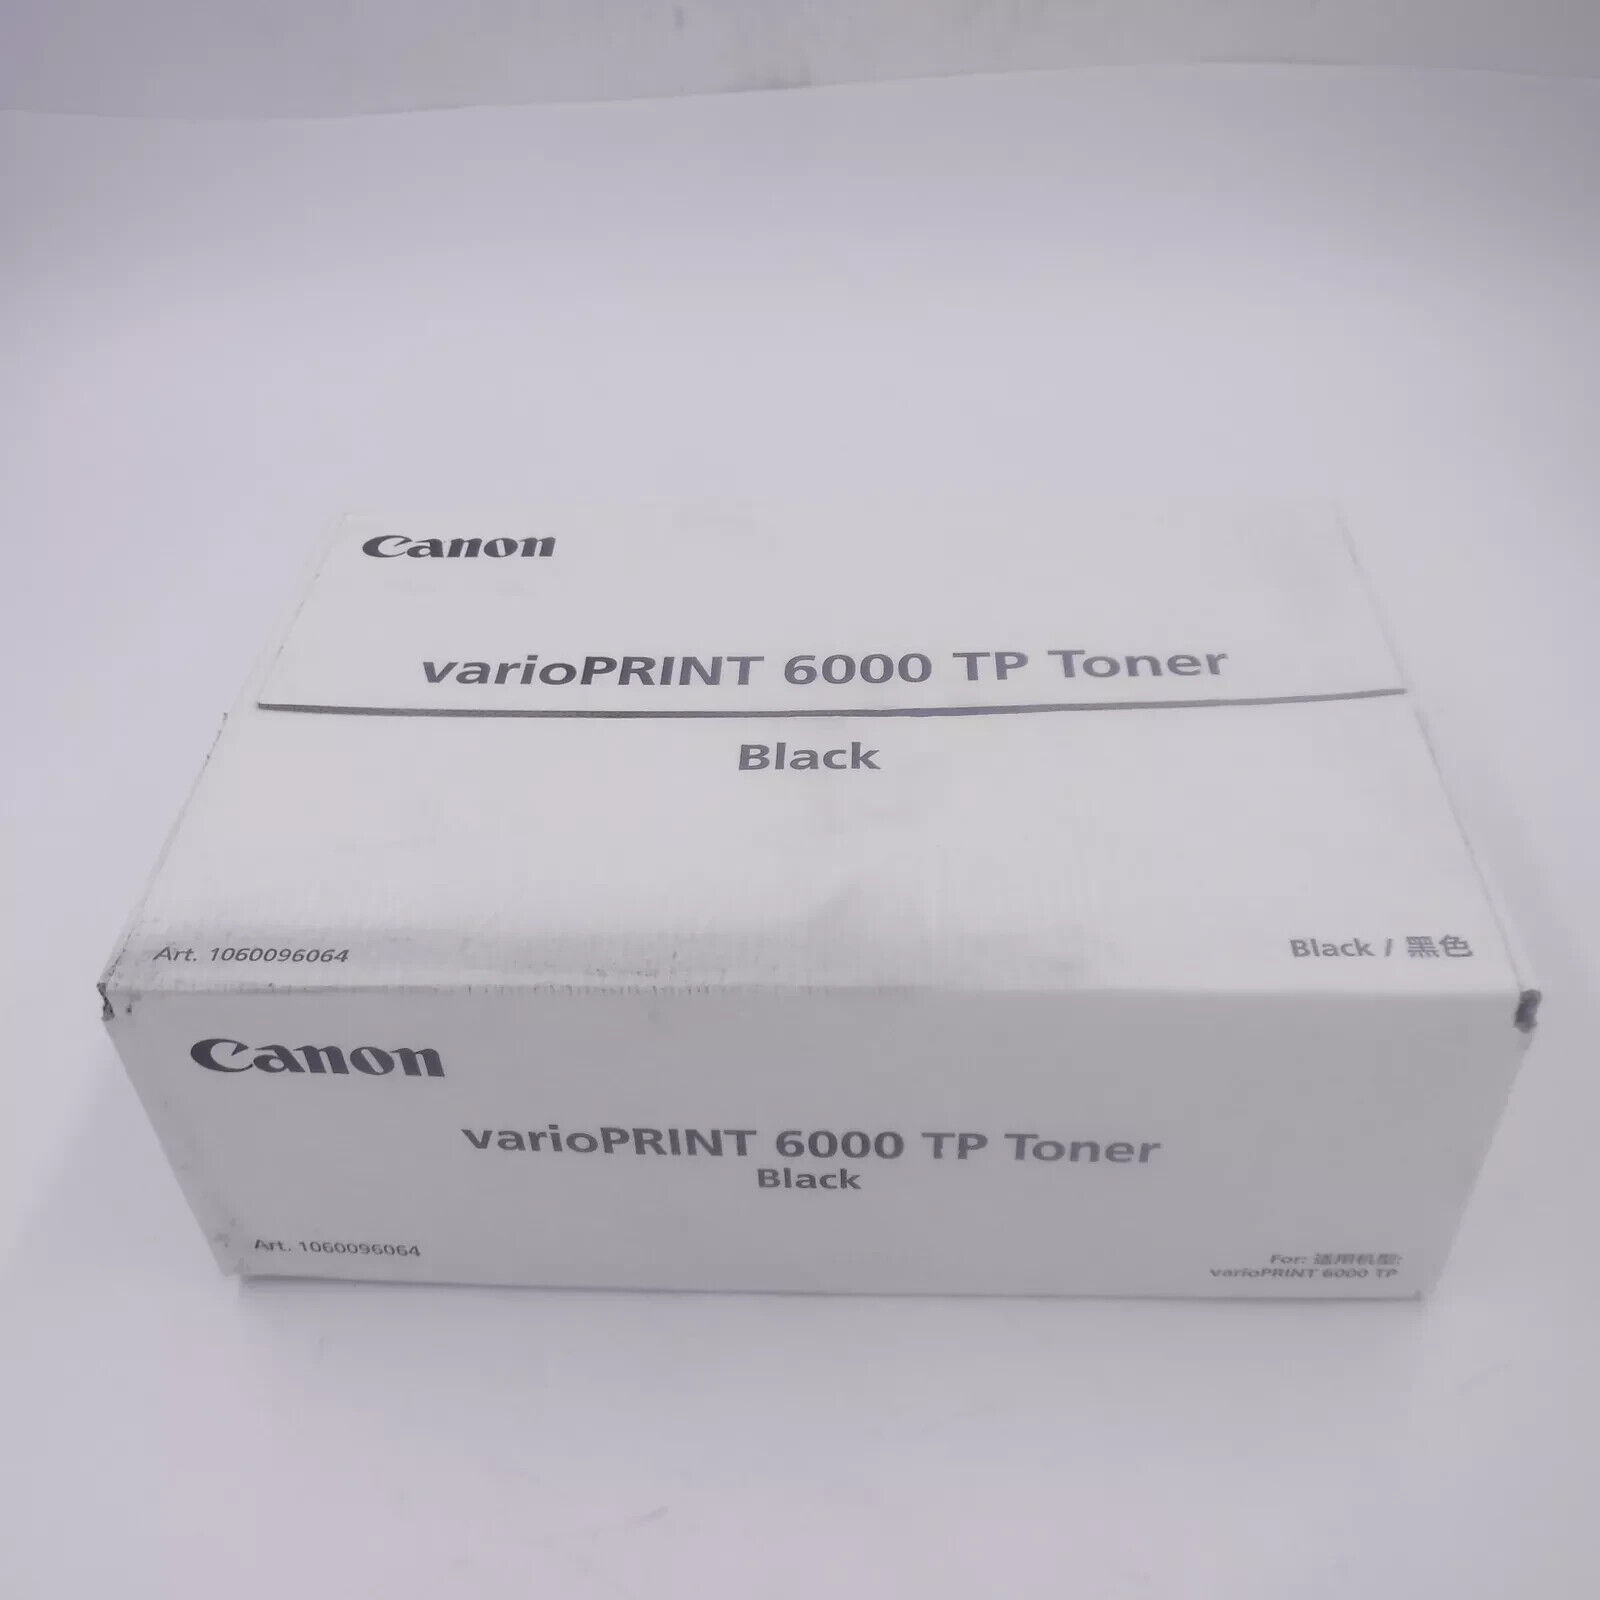 Genuine OEM Canon varioPrint 6000 TP Black Toner 7492B002 1060096064